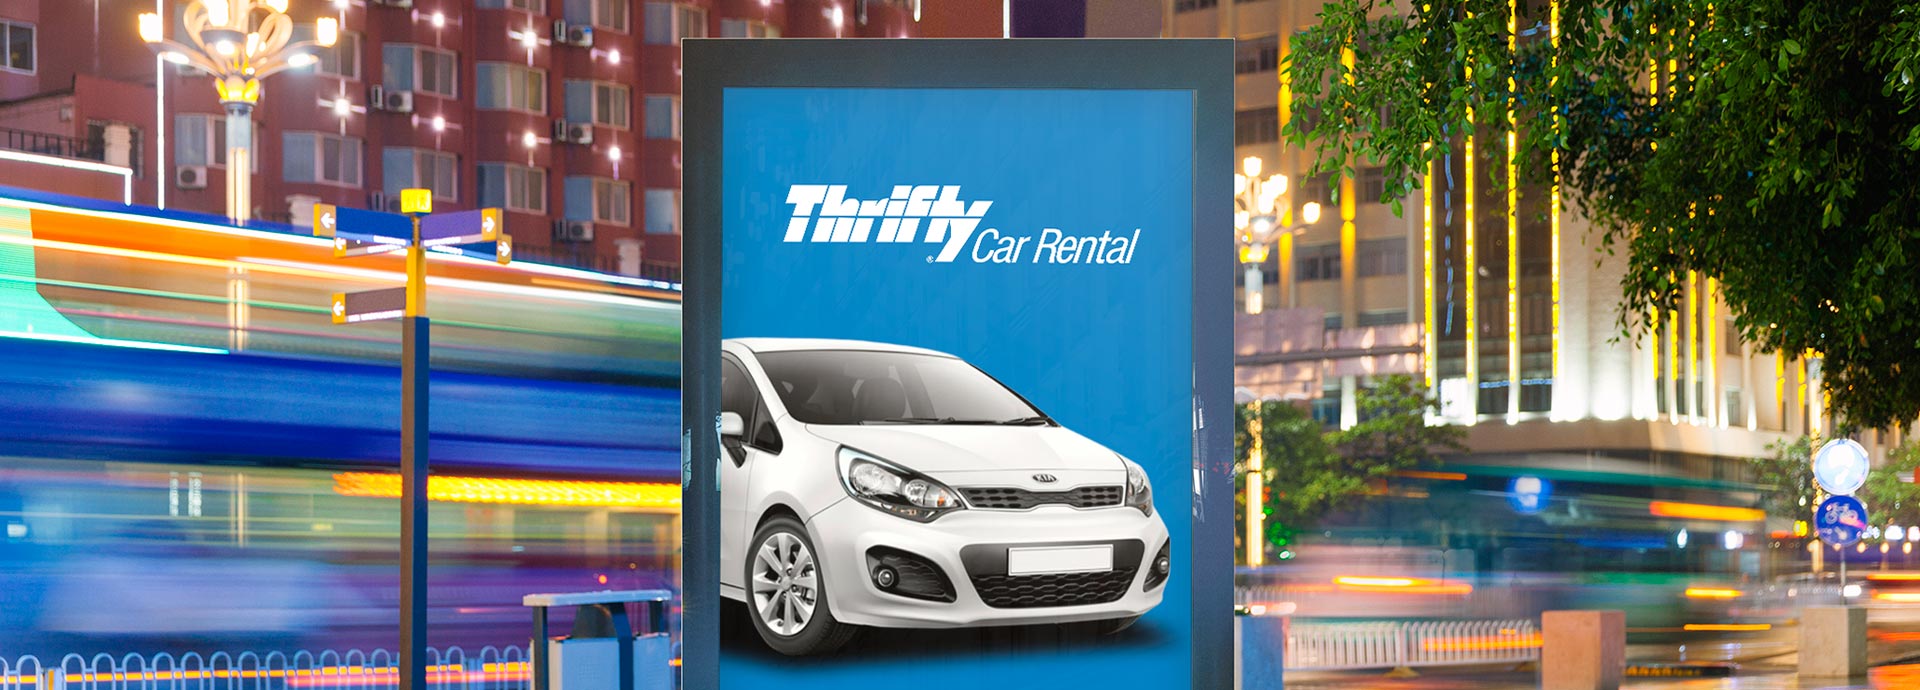 Thrifty Rent a Car - Arriendo de autos | Rentingcarz Rent a car